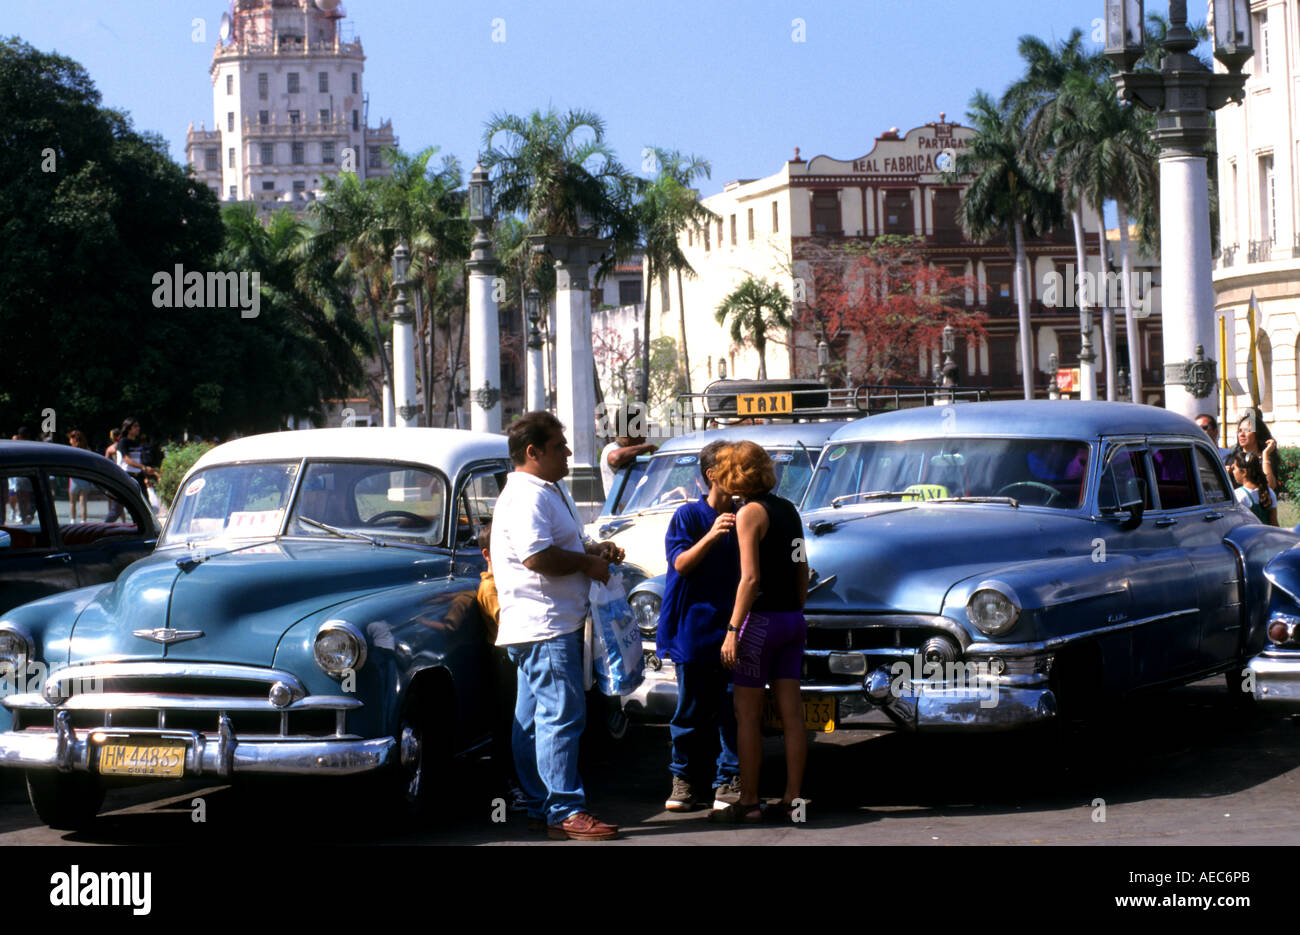 Havana Cars old timer Transport Havana Taxi Classic American Public Transport Vintage Car Stock Photo